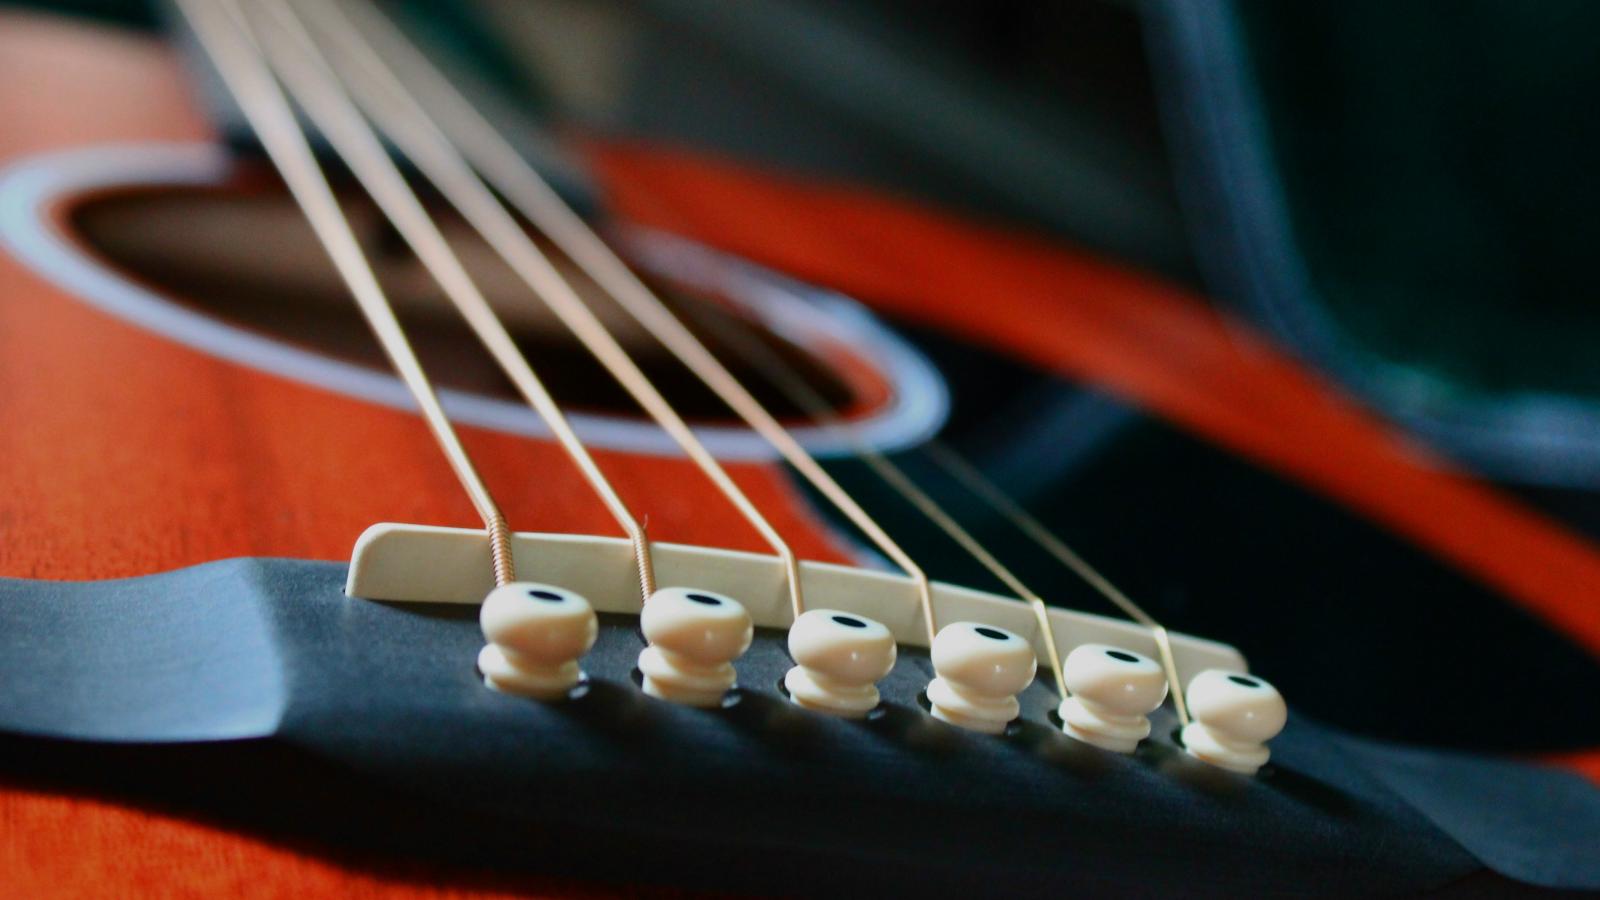  up guitars string blurred background guitar picks martin wallpaper